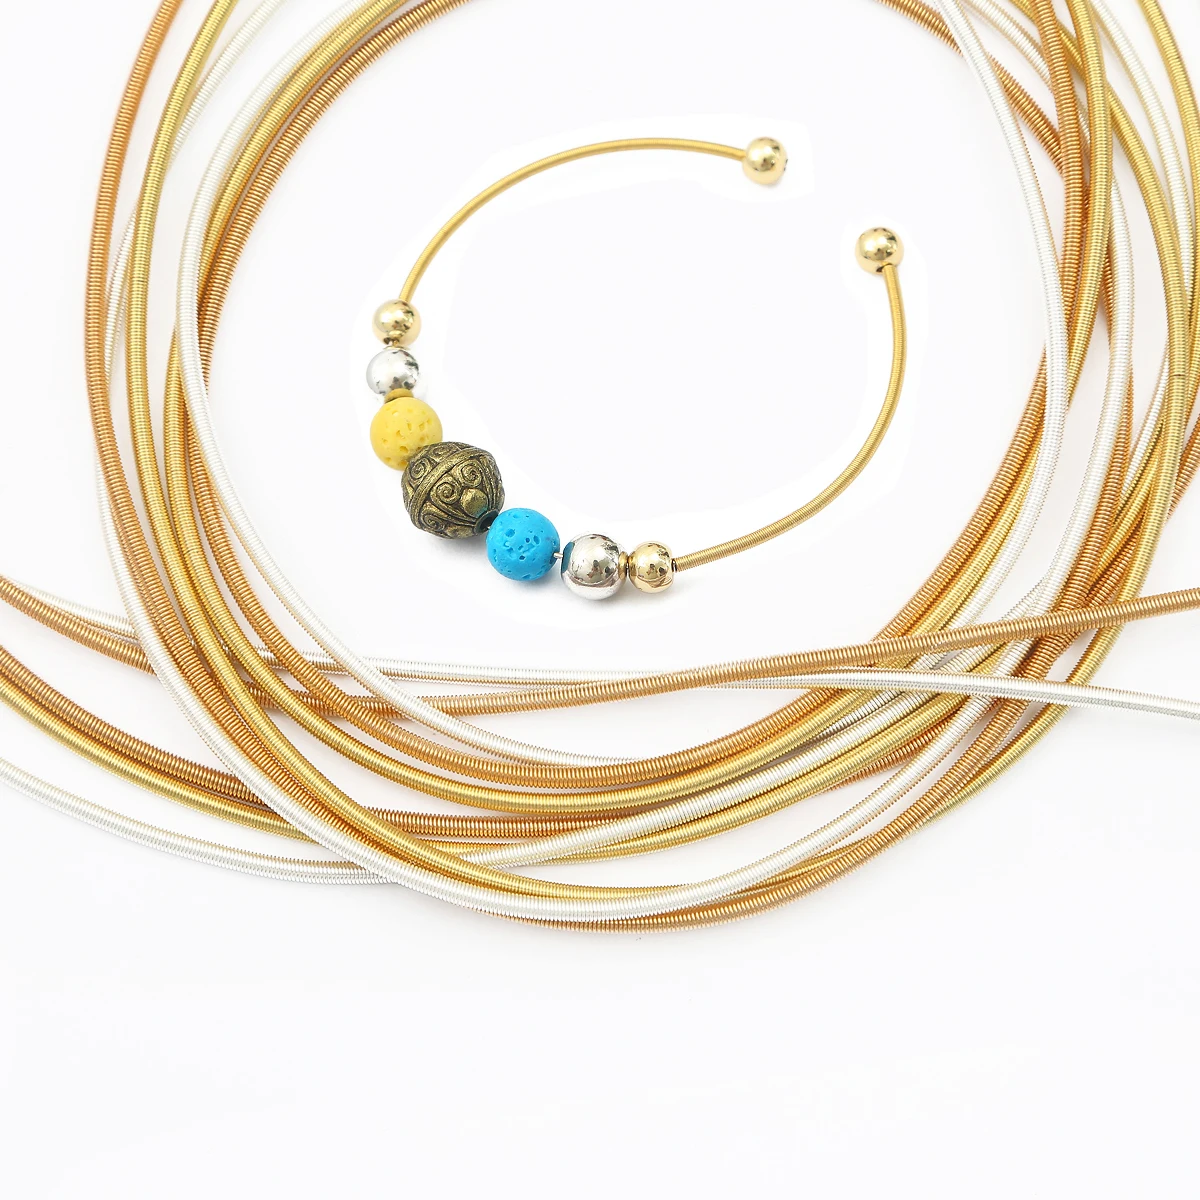 Steel Jewelry Memory Wire Beading Wire  Memory Wire Jewelry Making Necklace  - Jewelry Findings & Components - Aliexpress